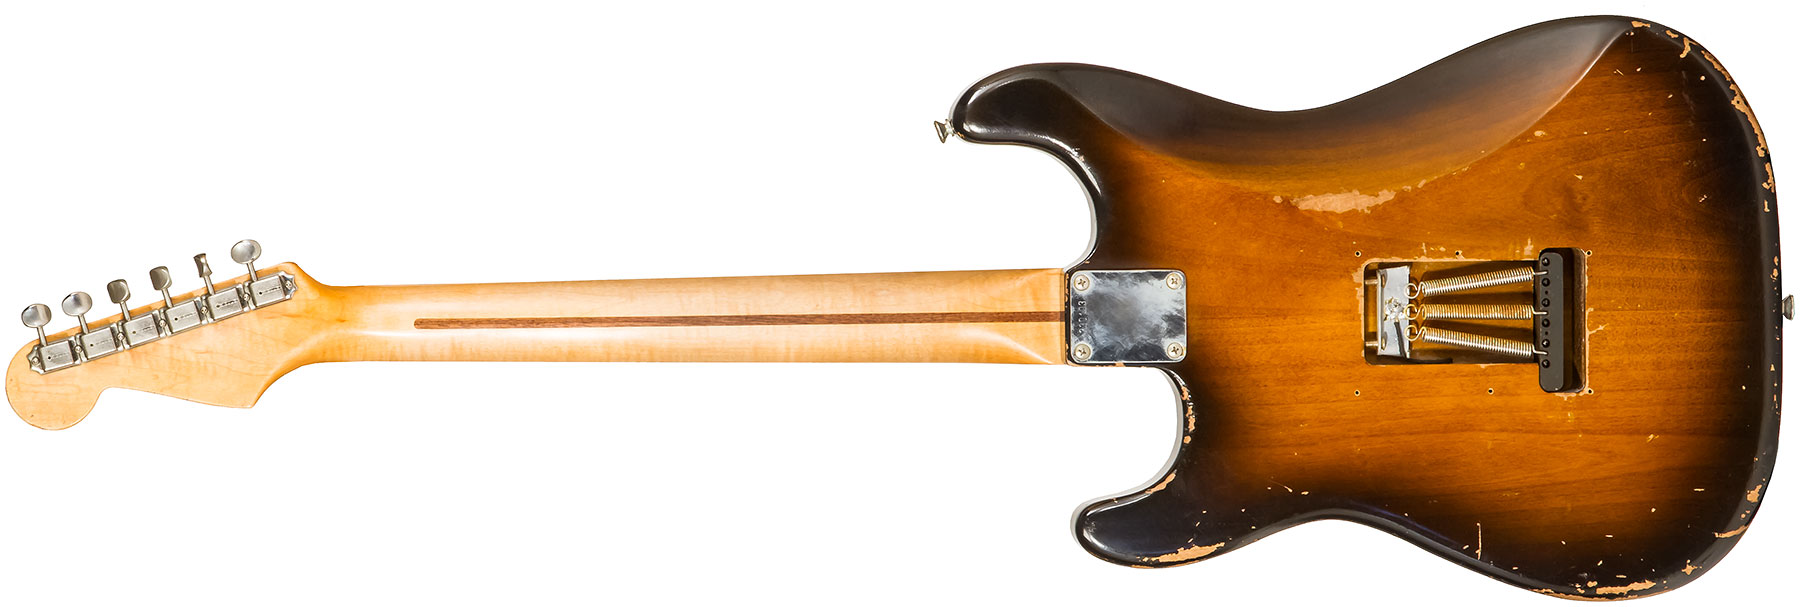 Rebelrelic S-series 54 3s Trem Mn #230103 - Medium Aged 2-tone Sunburst - Guitarra eléctrica con forma de str. - Variation 1